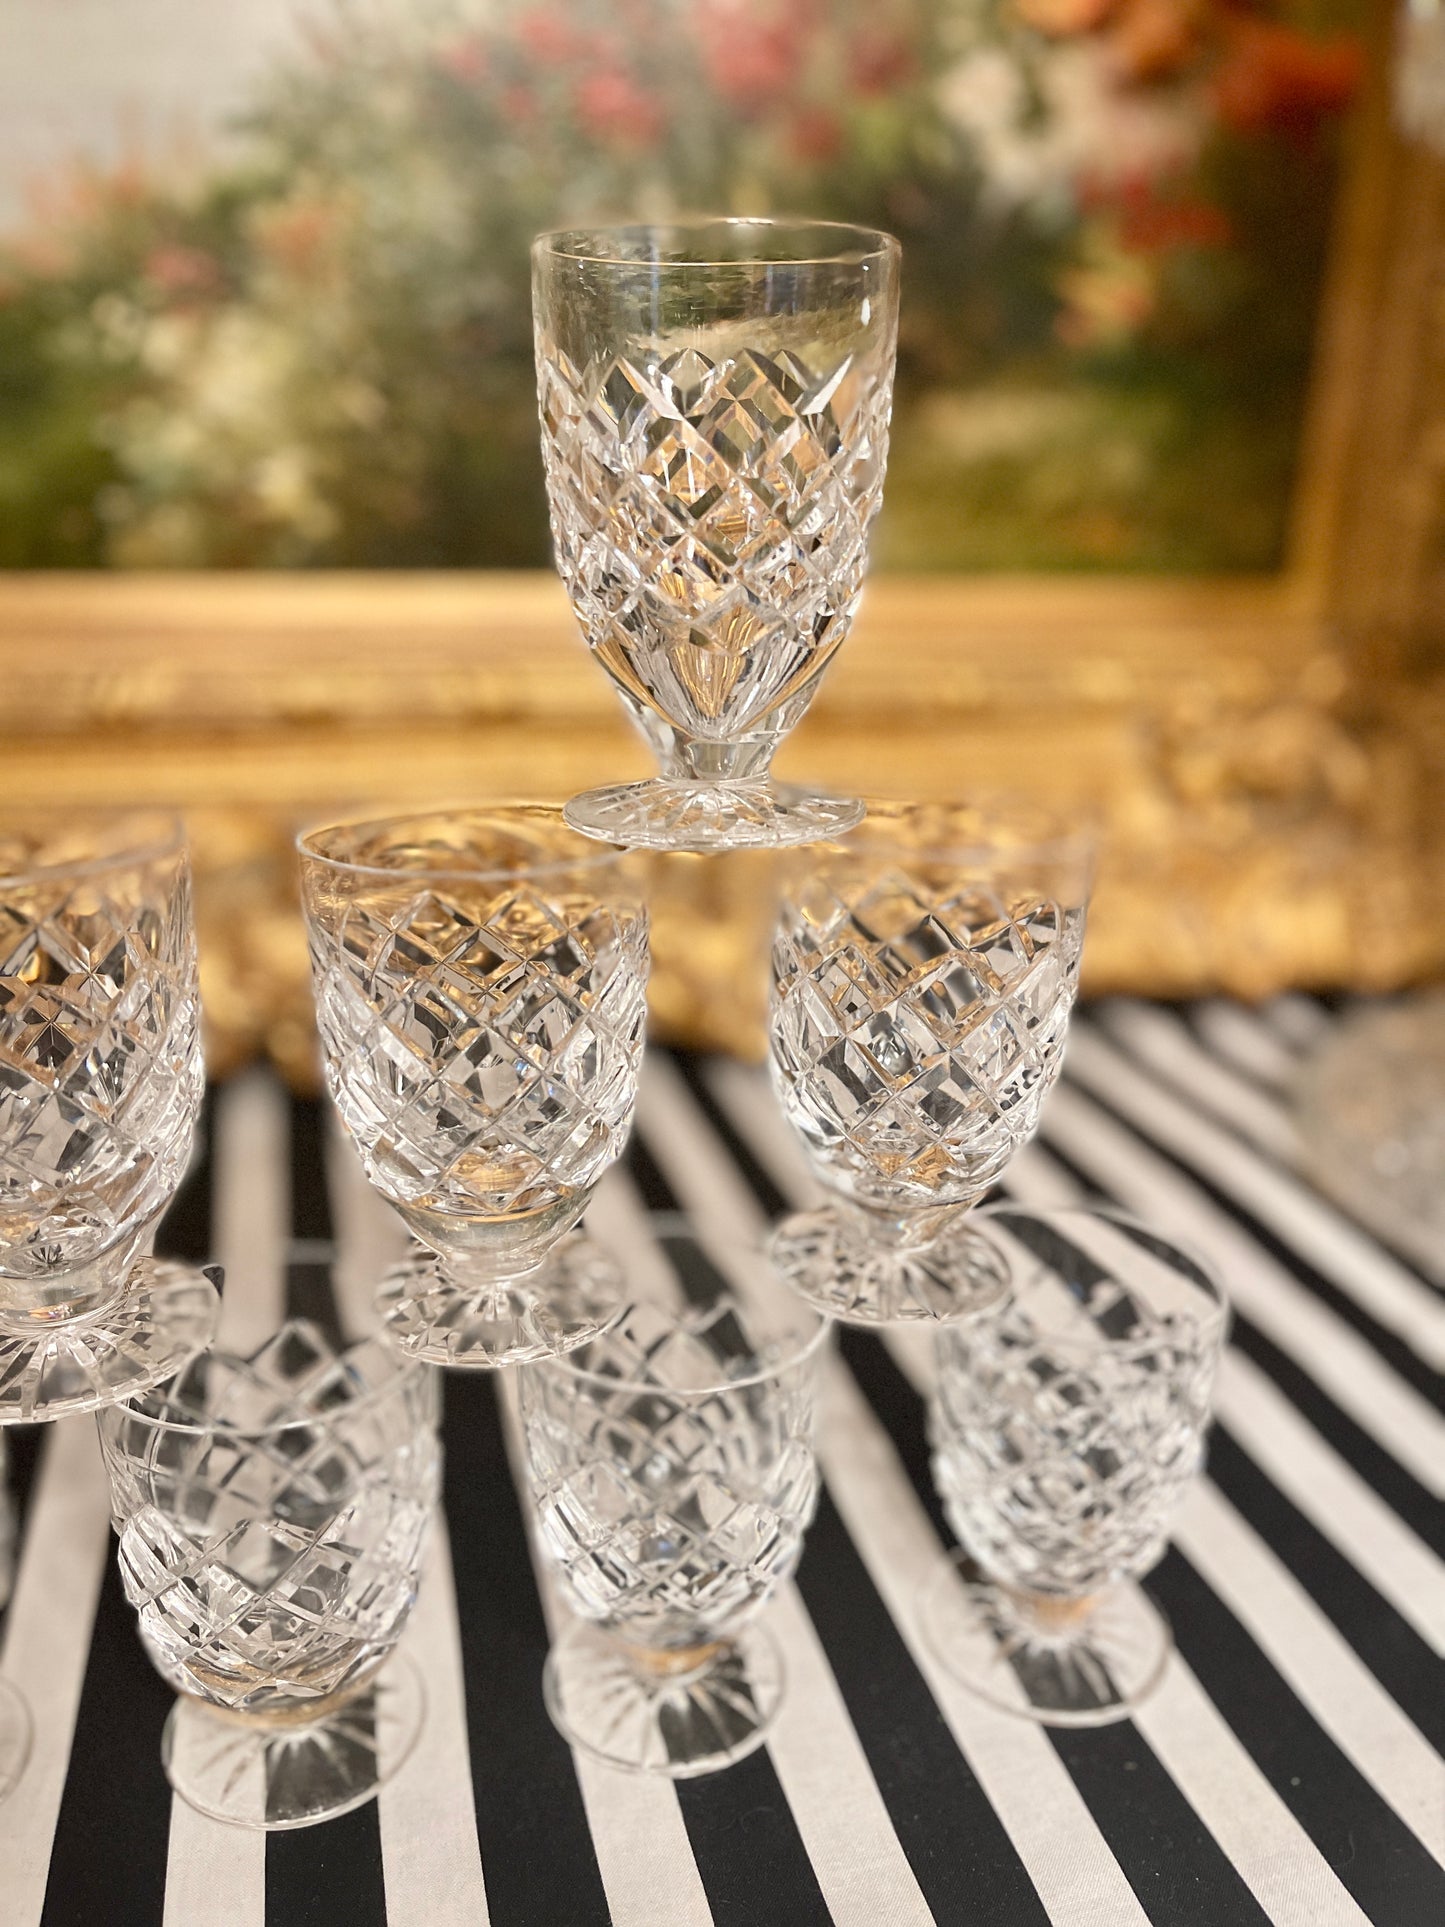 Vintage Waterford Crystal Comeragh Juice Glass,  Apéritif Glass, Bar Glasses